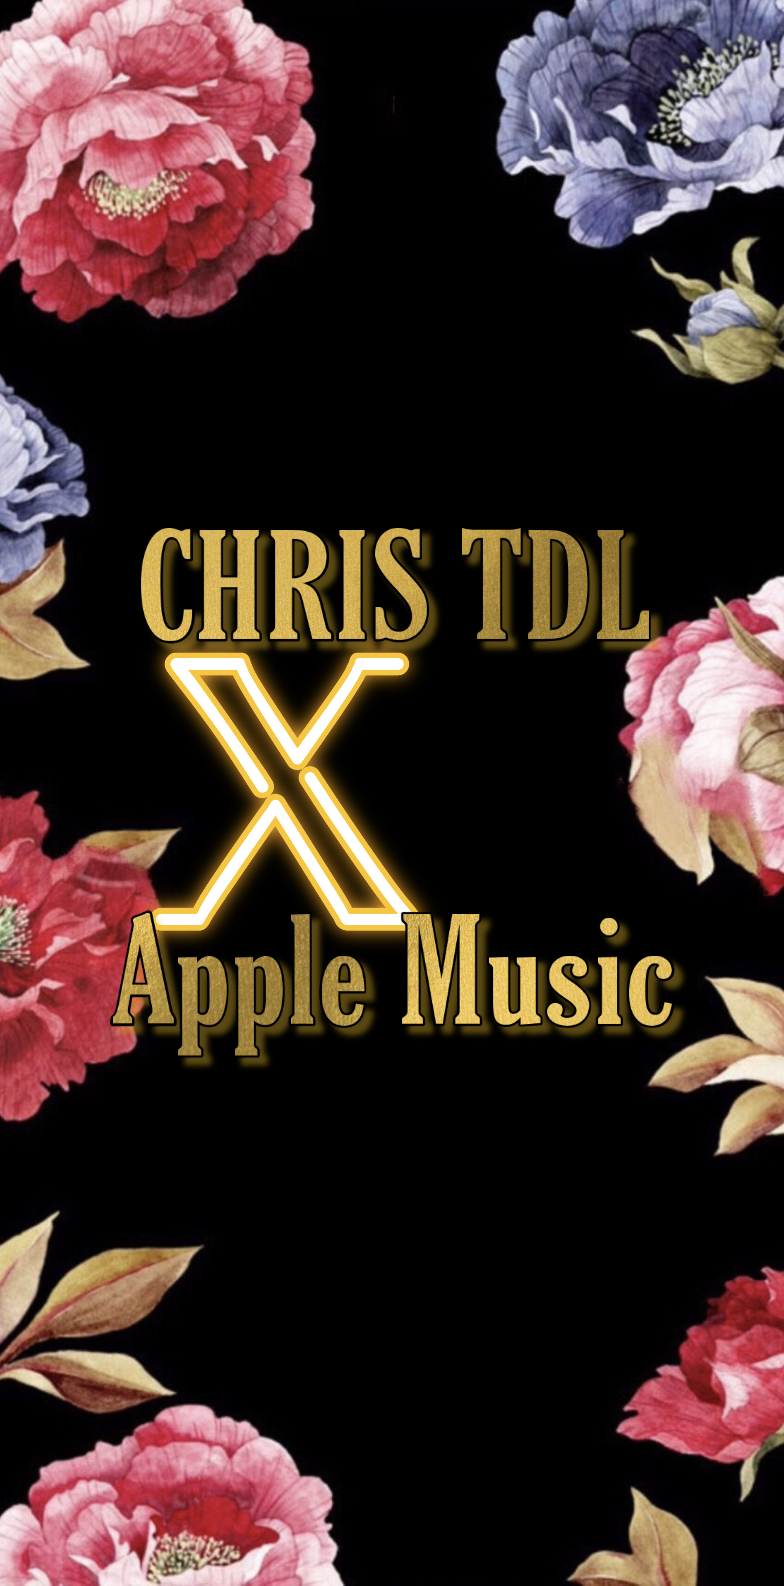 Chris TDL X Apple Music by Businessmagnate